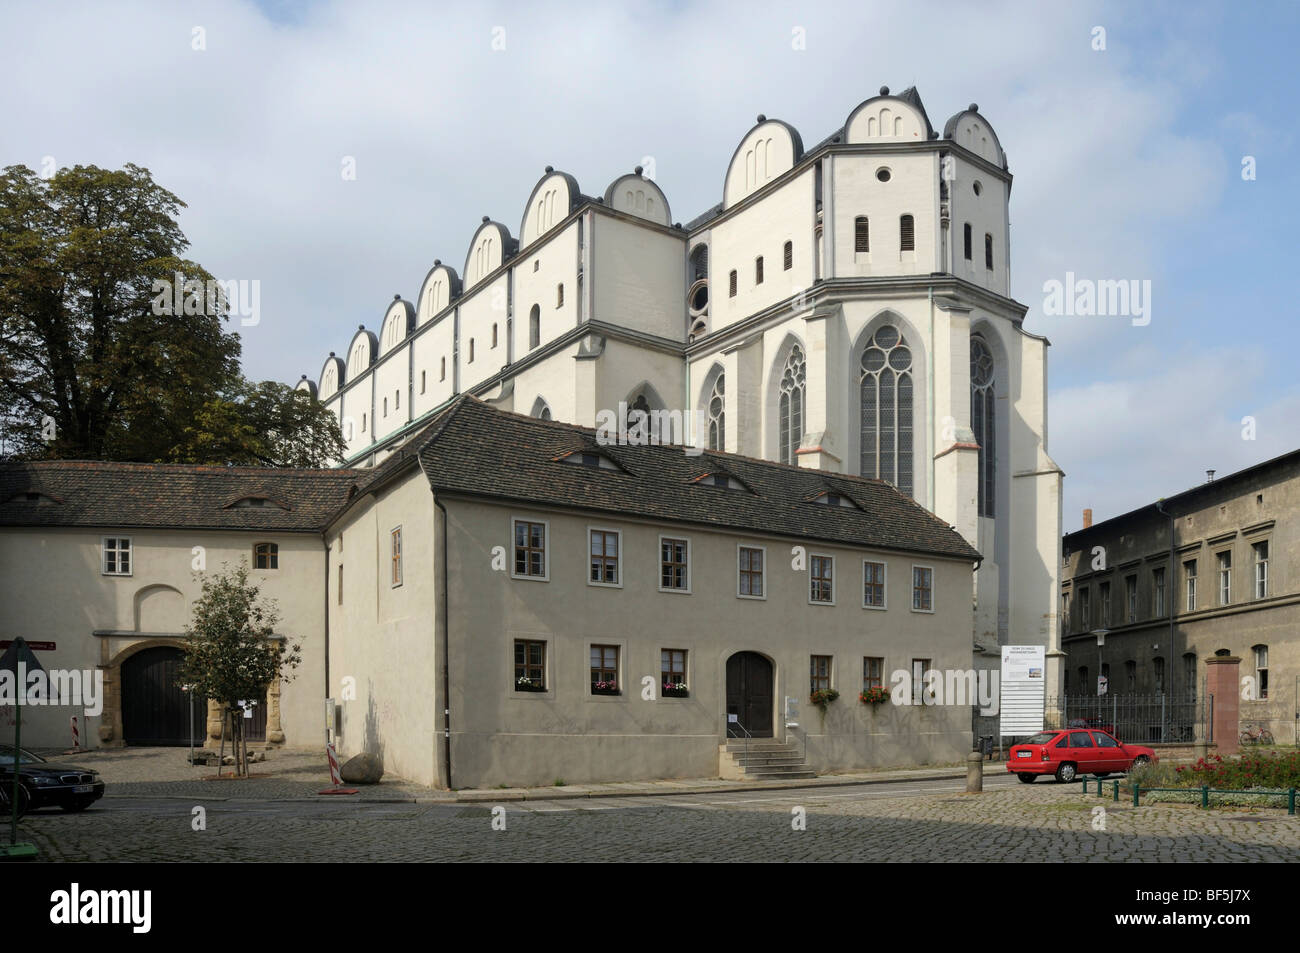 Cathedral, Halle an der Saale, Sachsen-Anhalt, Germany, Europe Stock Photo